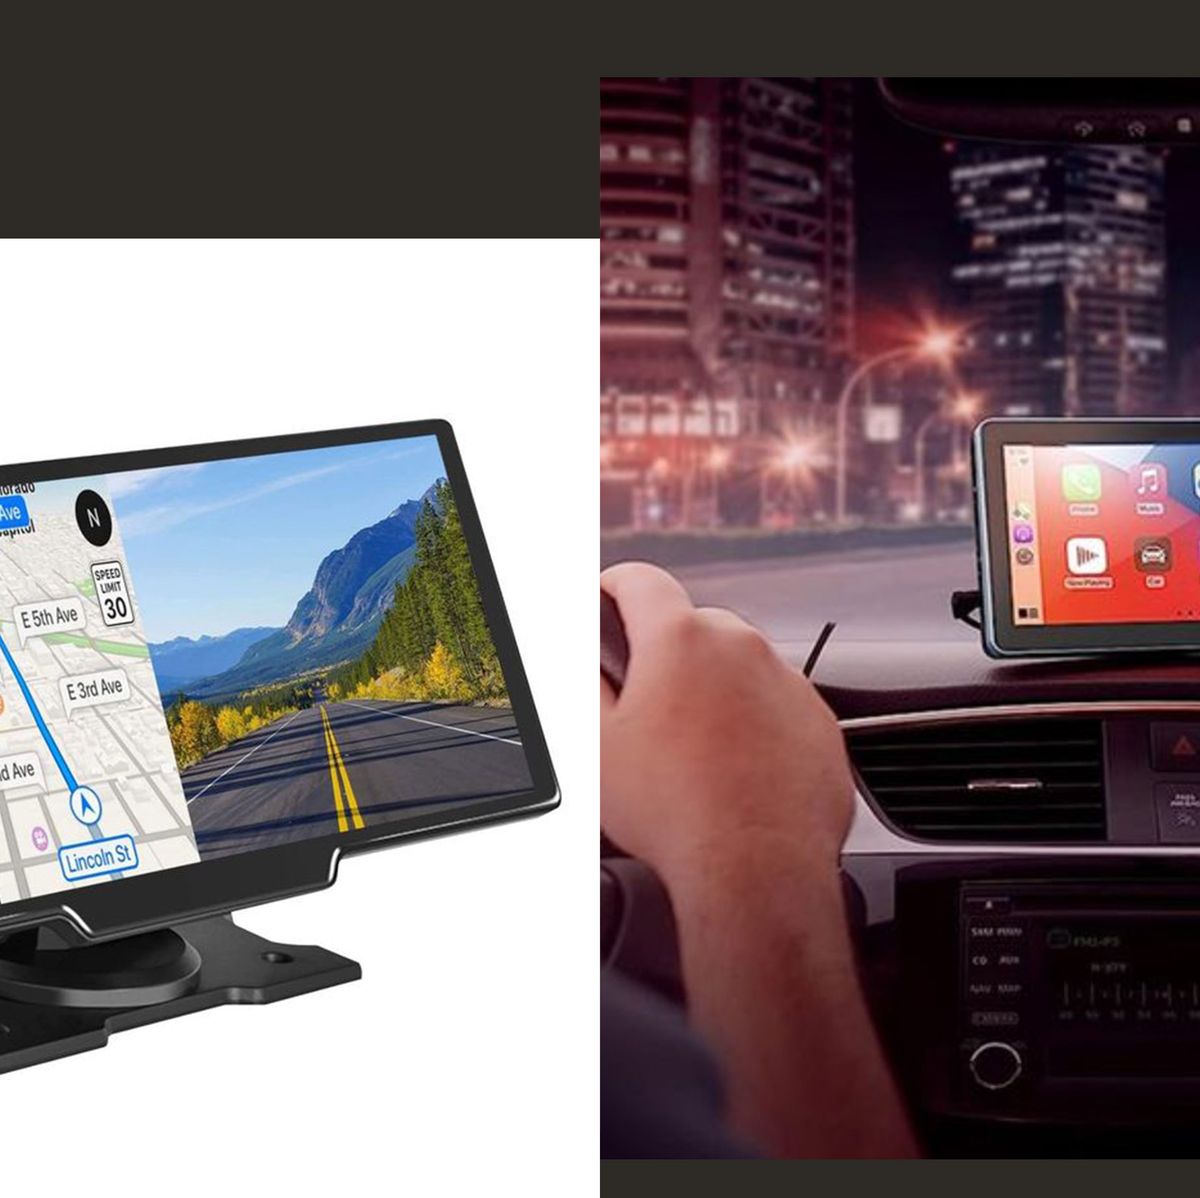 Best Apple CarPlay Head Unit for 2024 - Autoweek